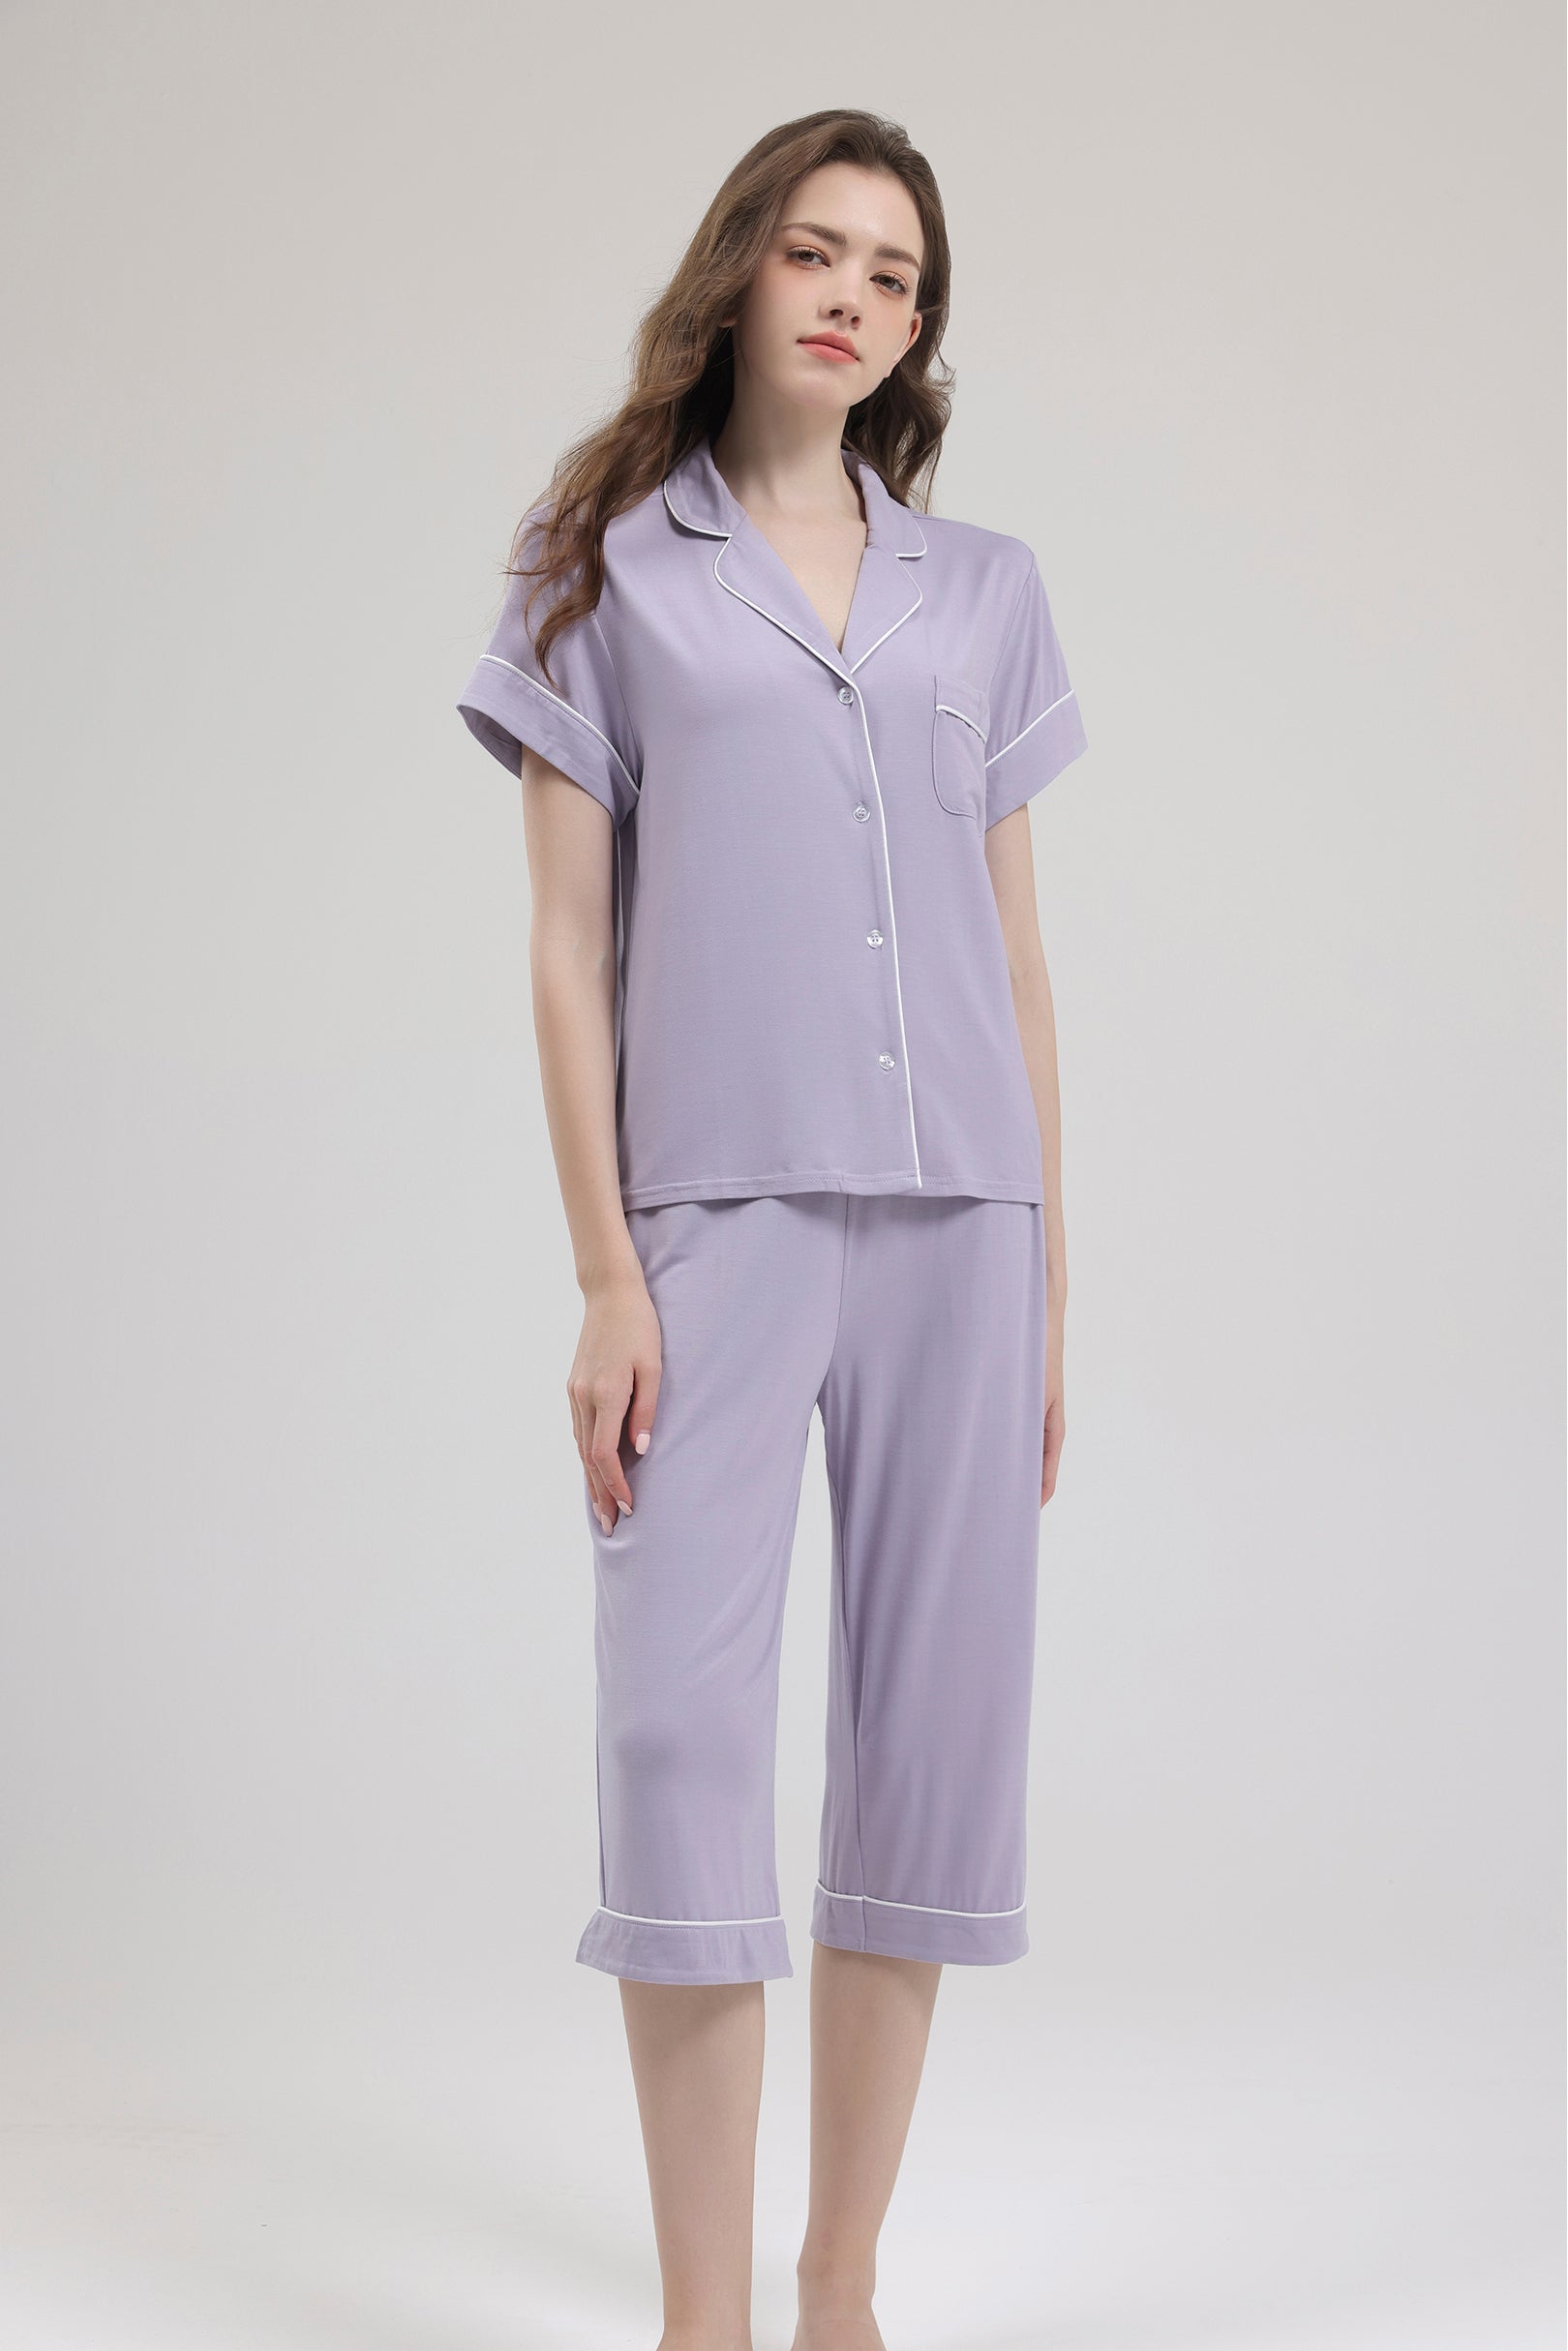 Signature Cropped Pyjamas Shirt in Lilac Grey